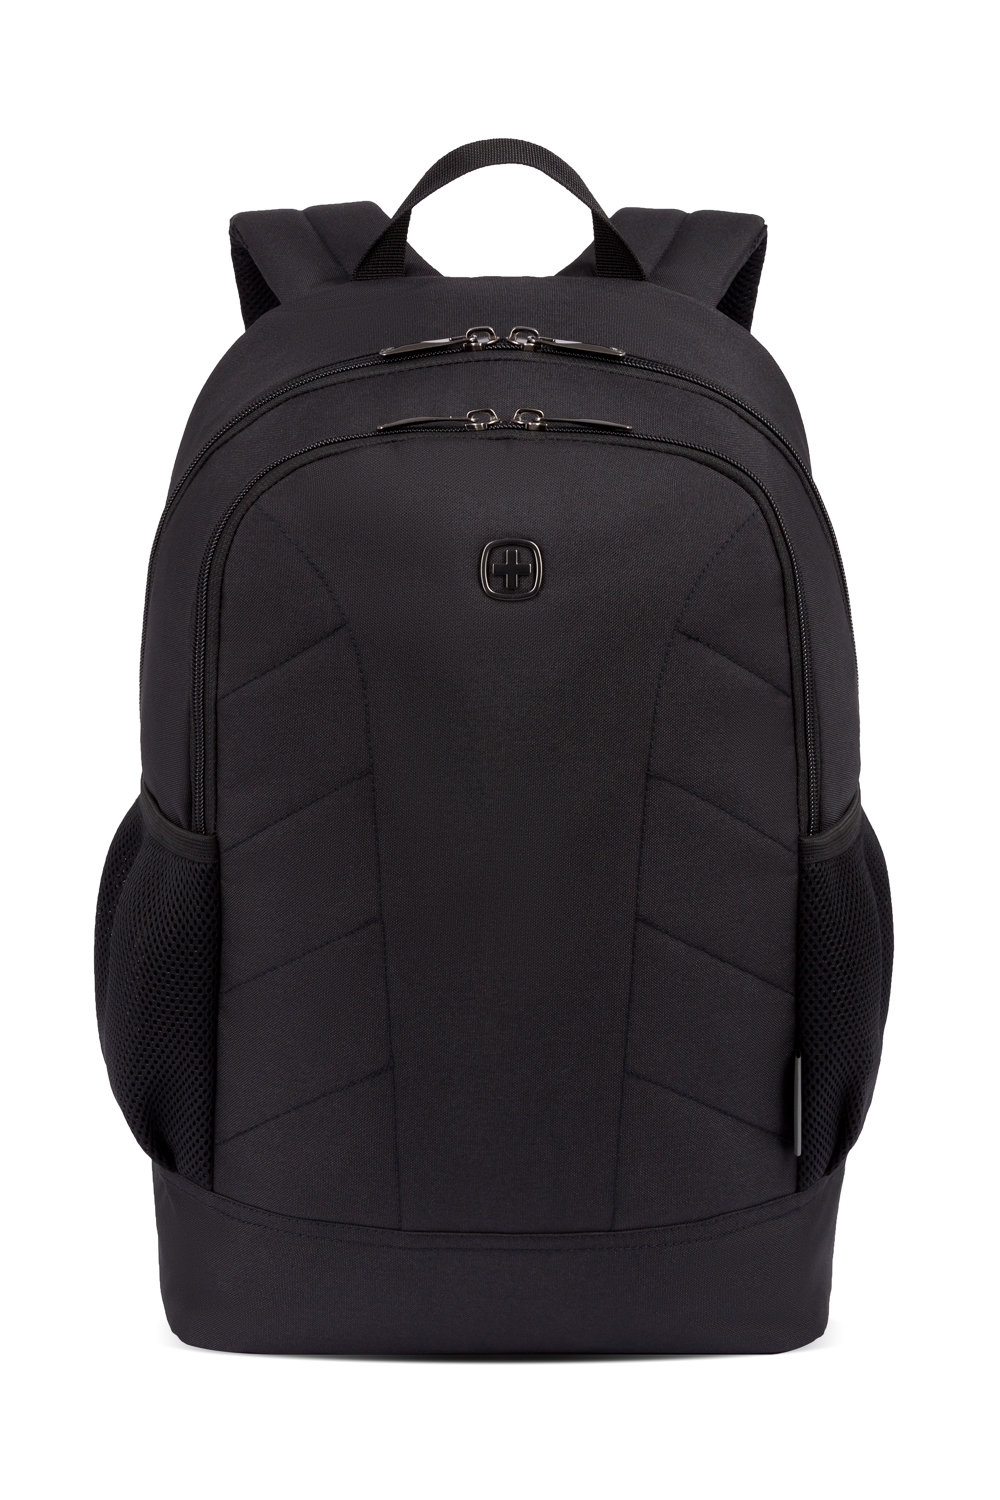 Wenger Quadma 16 inch Laptop Backpack - Black